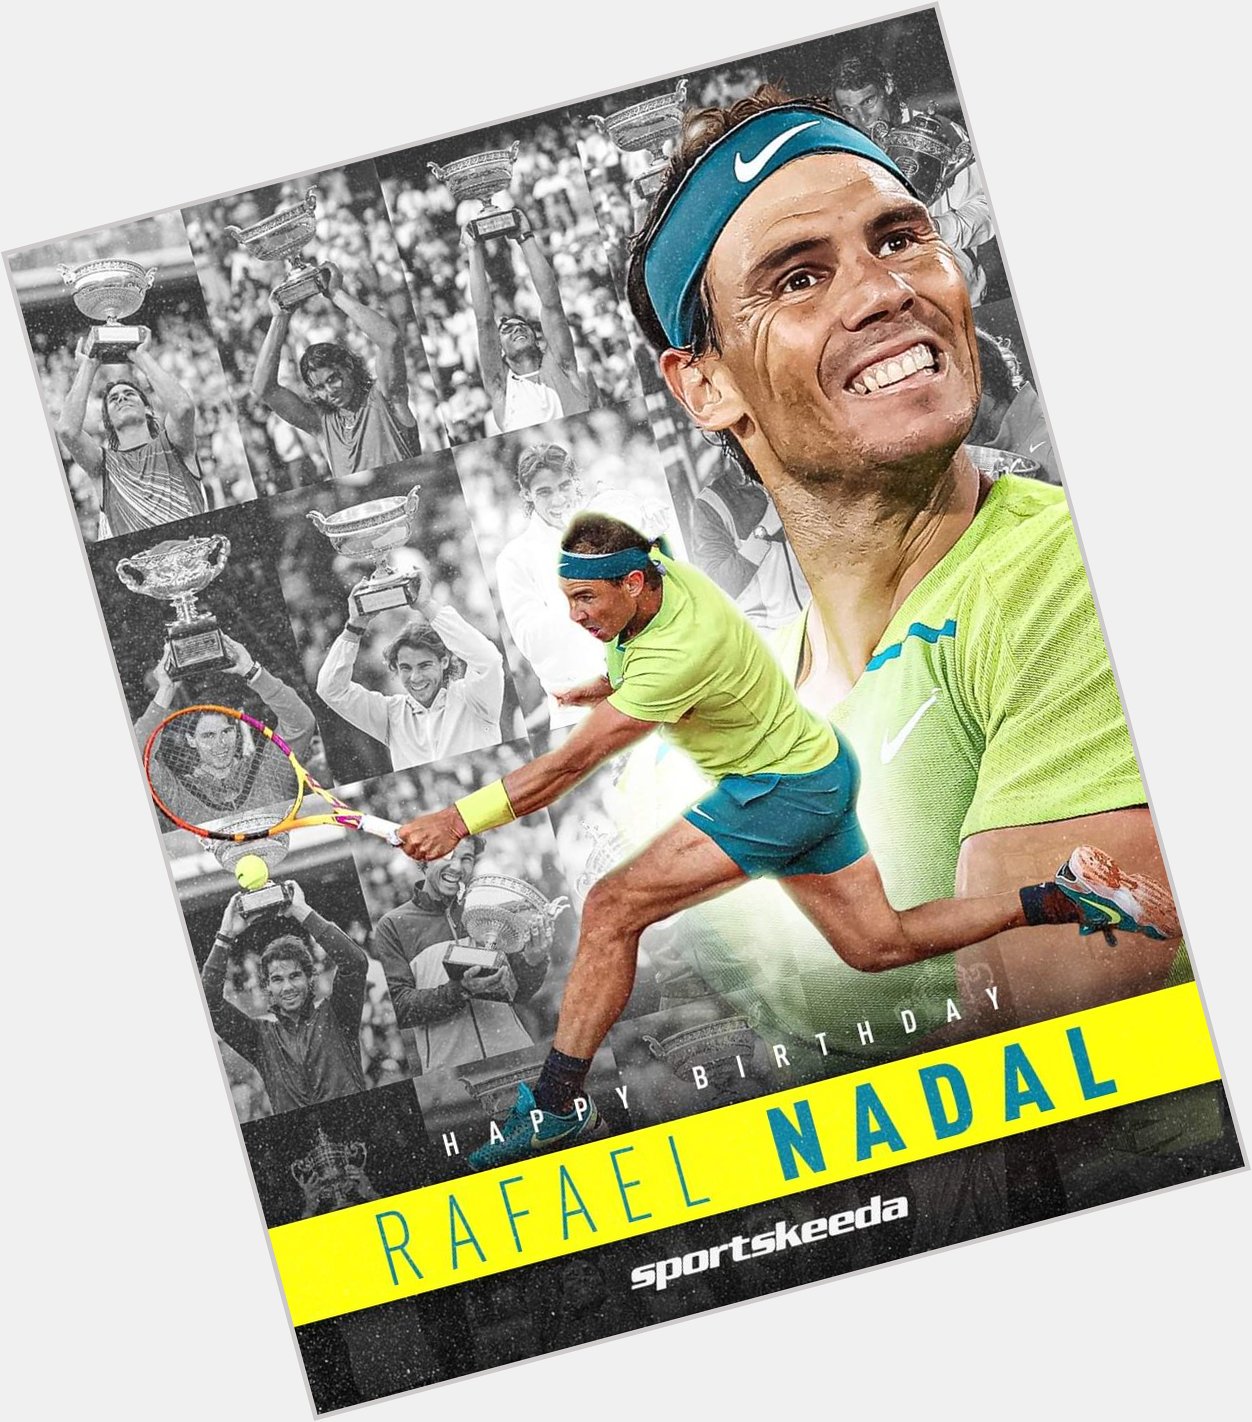 Happy birthday legend Rafael Nadal 